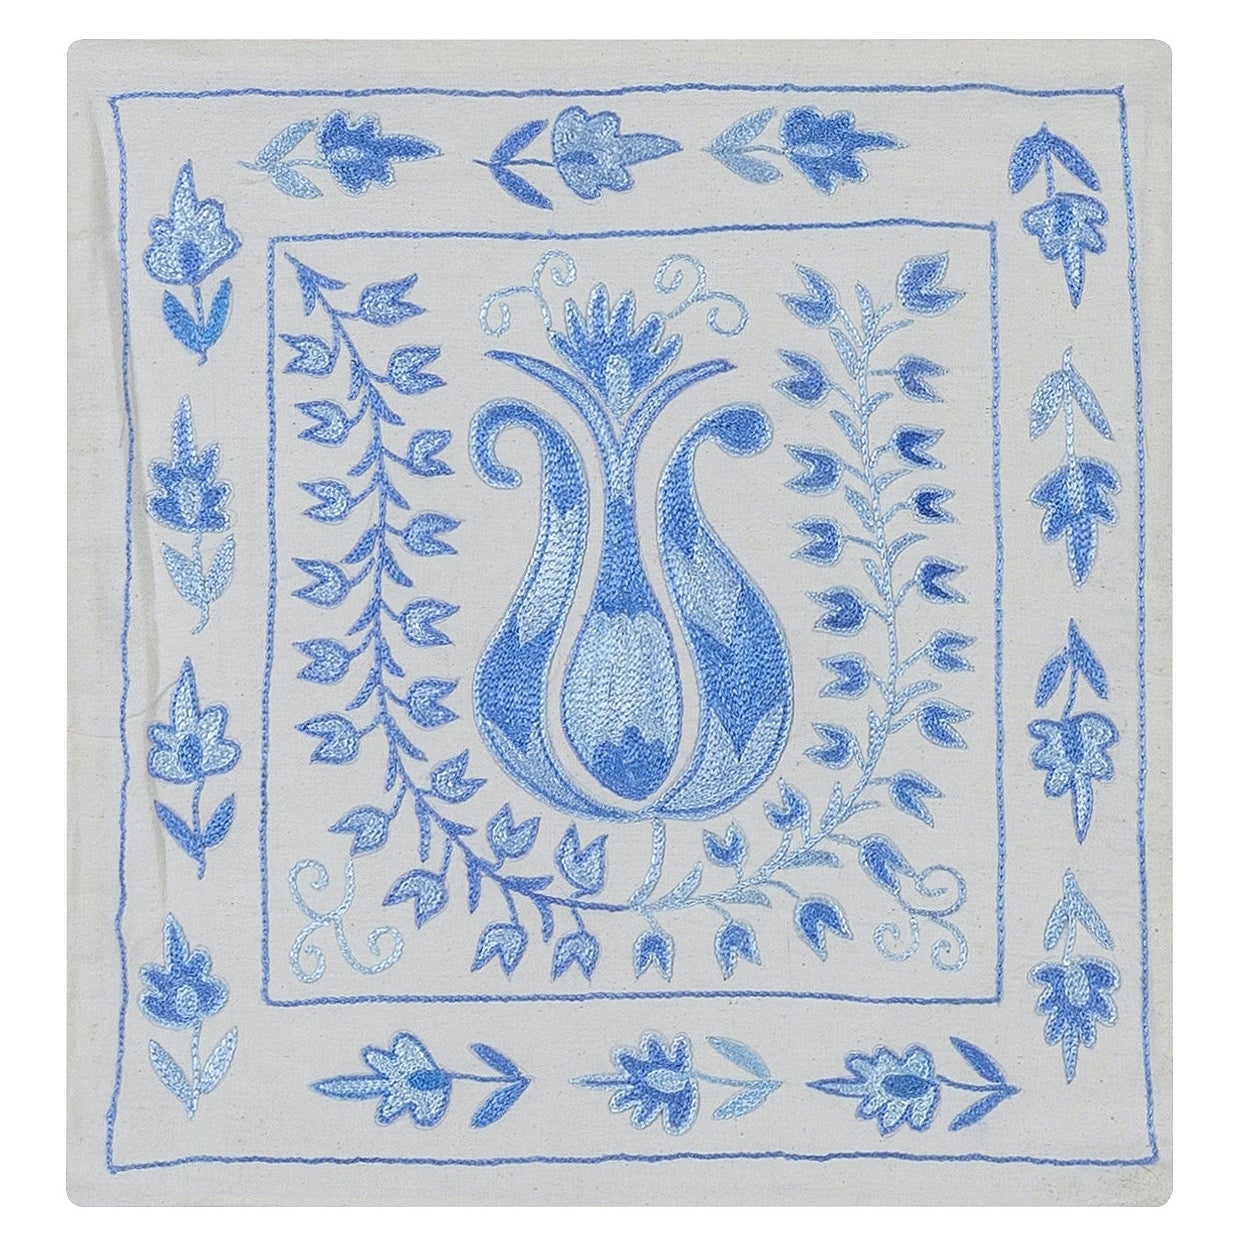 Silk Embroidered Suzani Lace Pillow, Uzbek Sham in Light Blue & Ivory